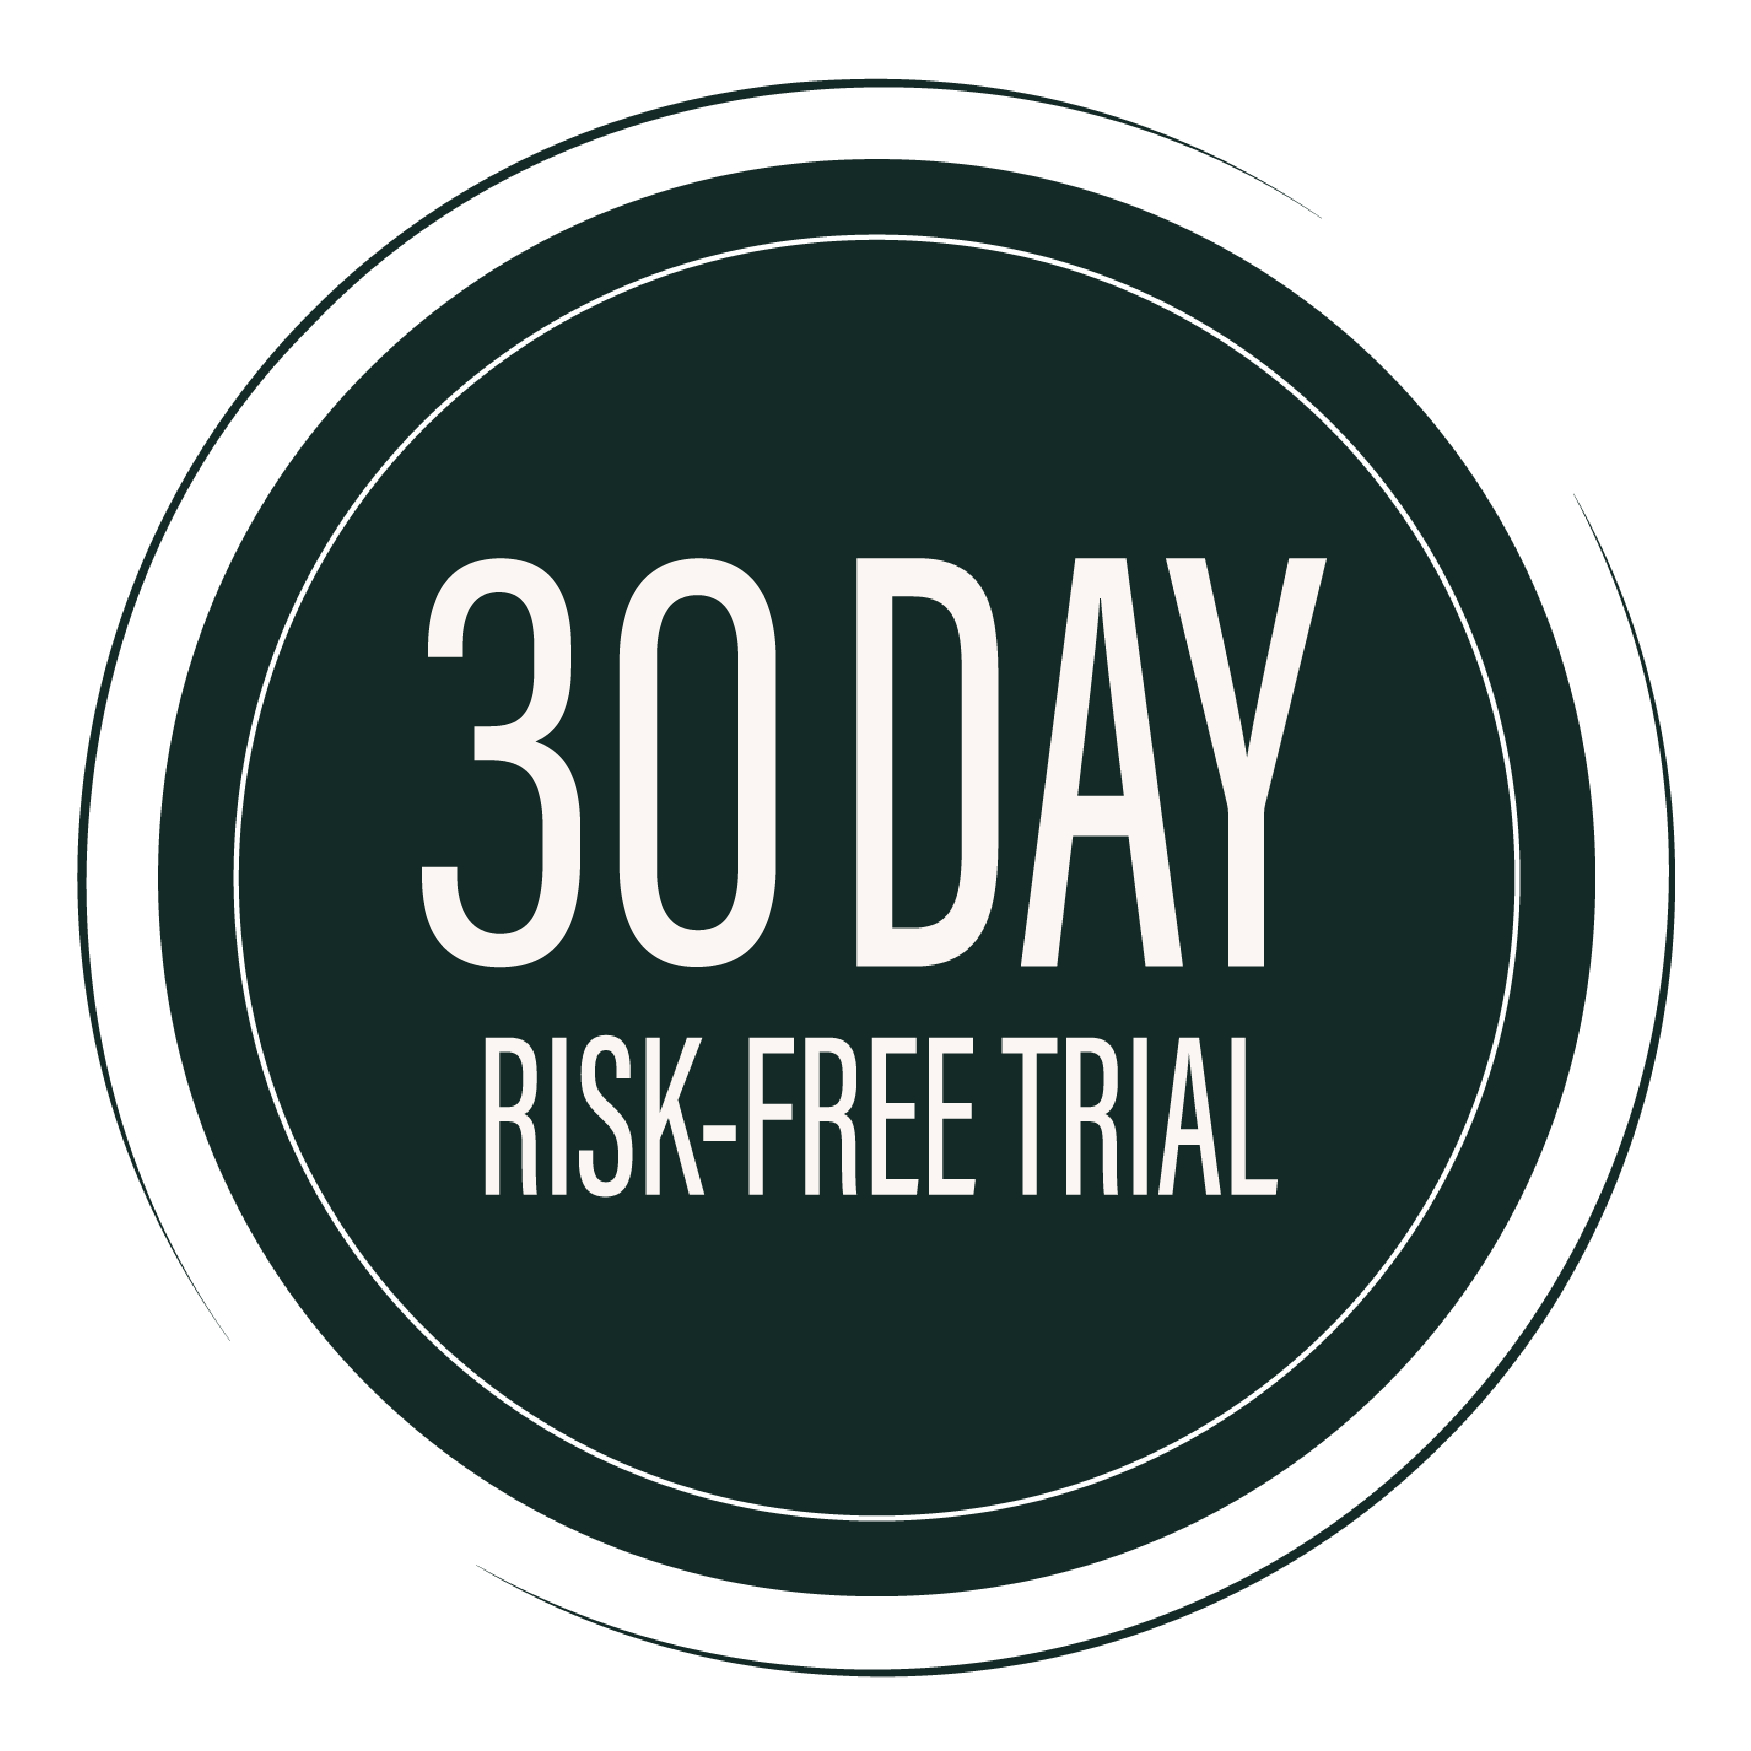 Risk-free trial